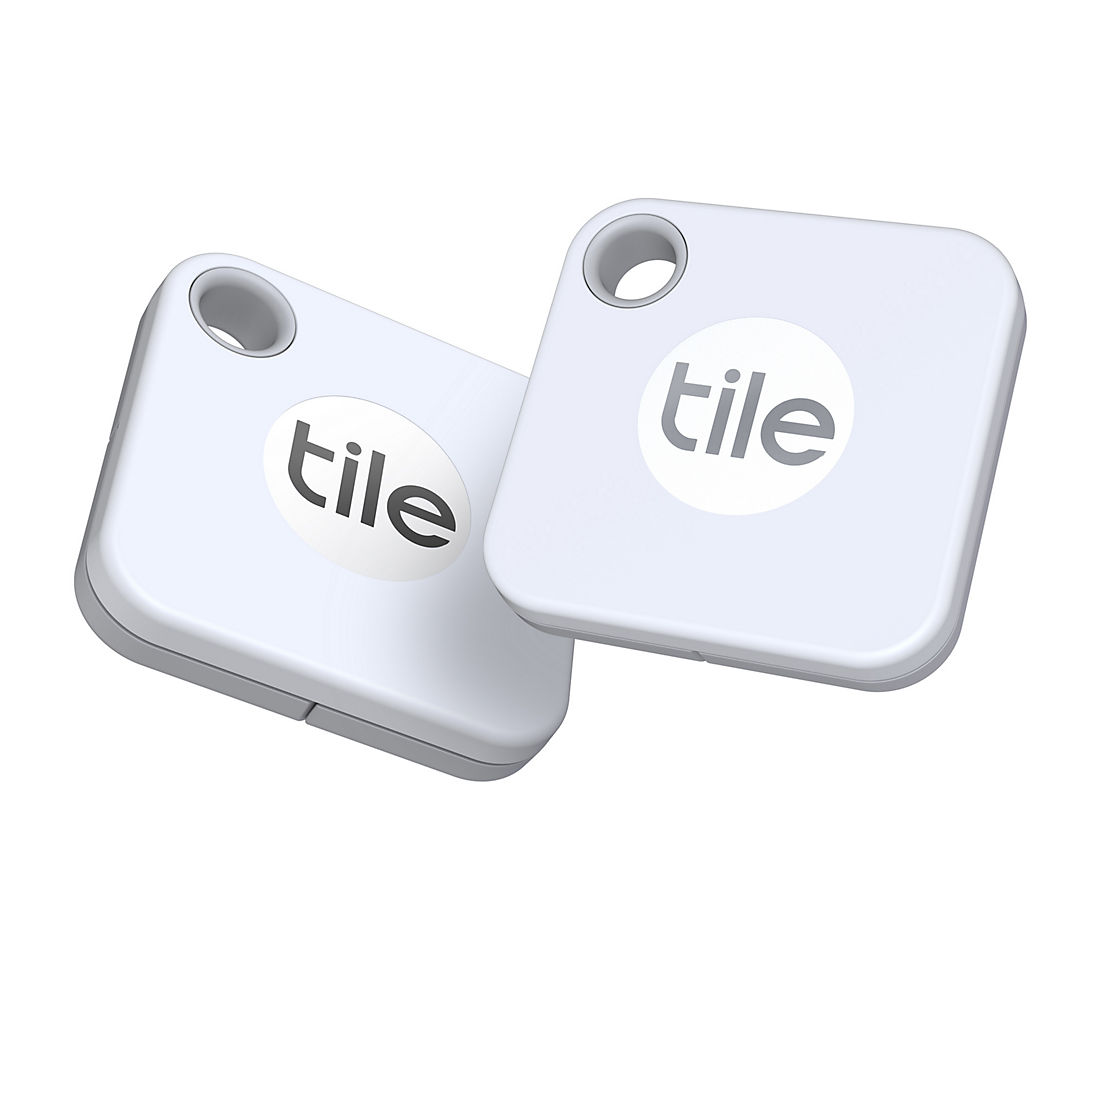 Tile Mate (2020) Bluetooth Tracker, Keys Finder and Item Locator, 2 pk. -  BJs Wholesale Club